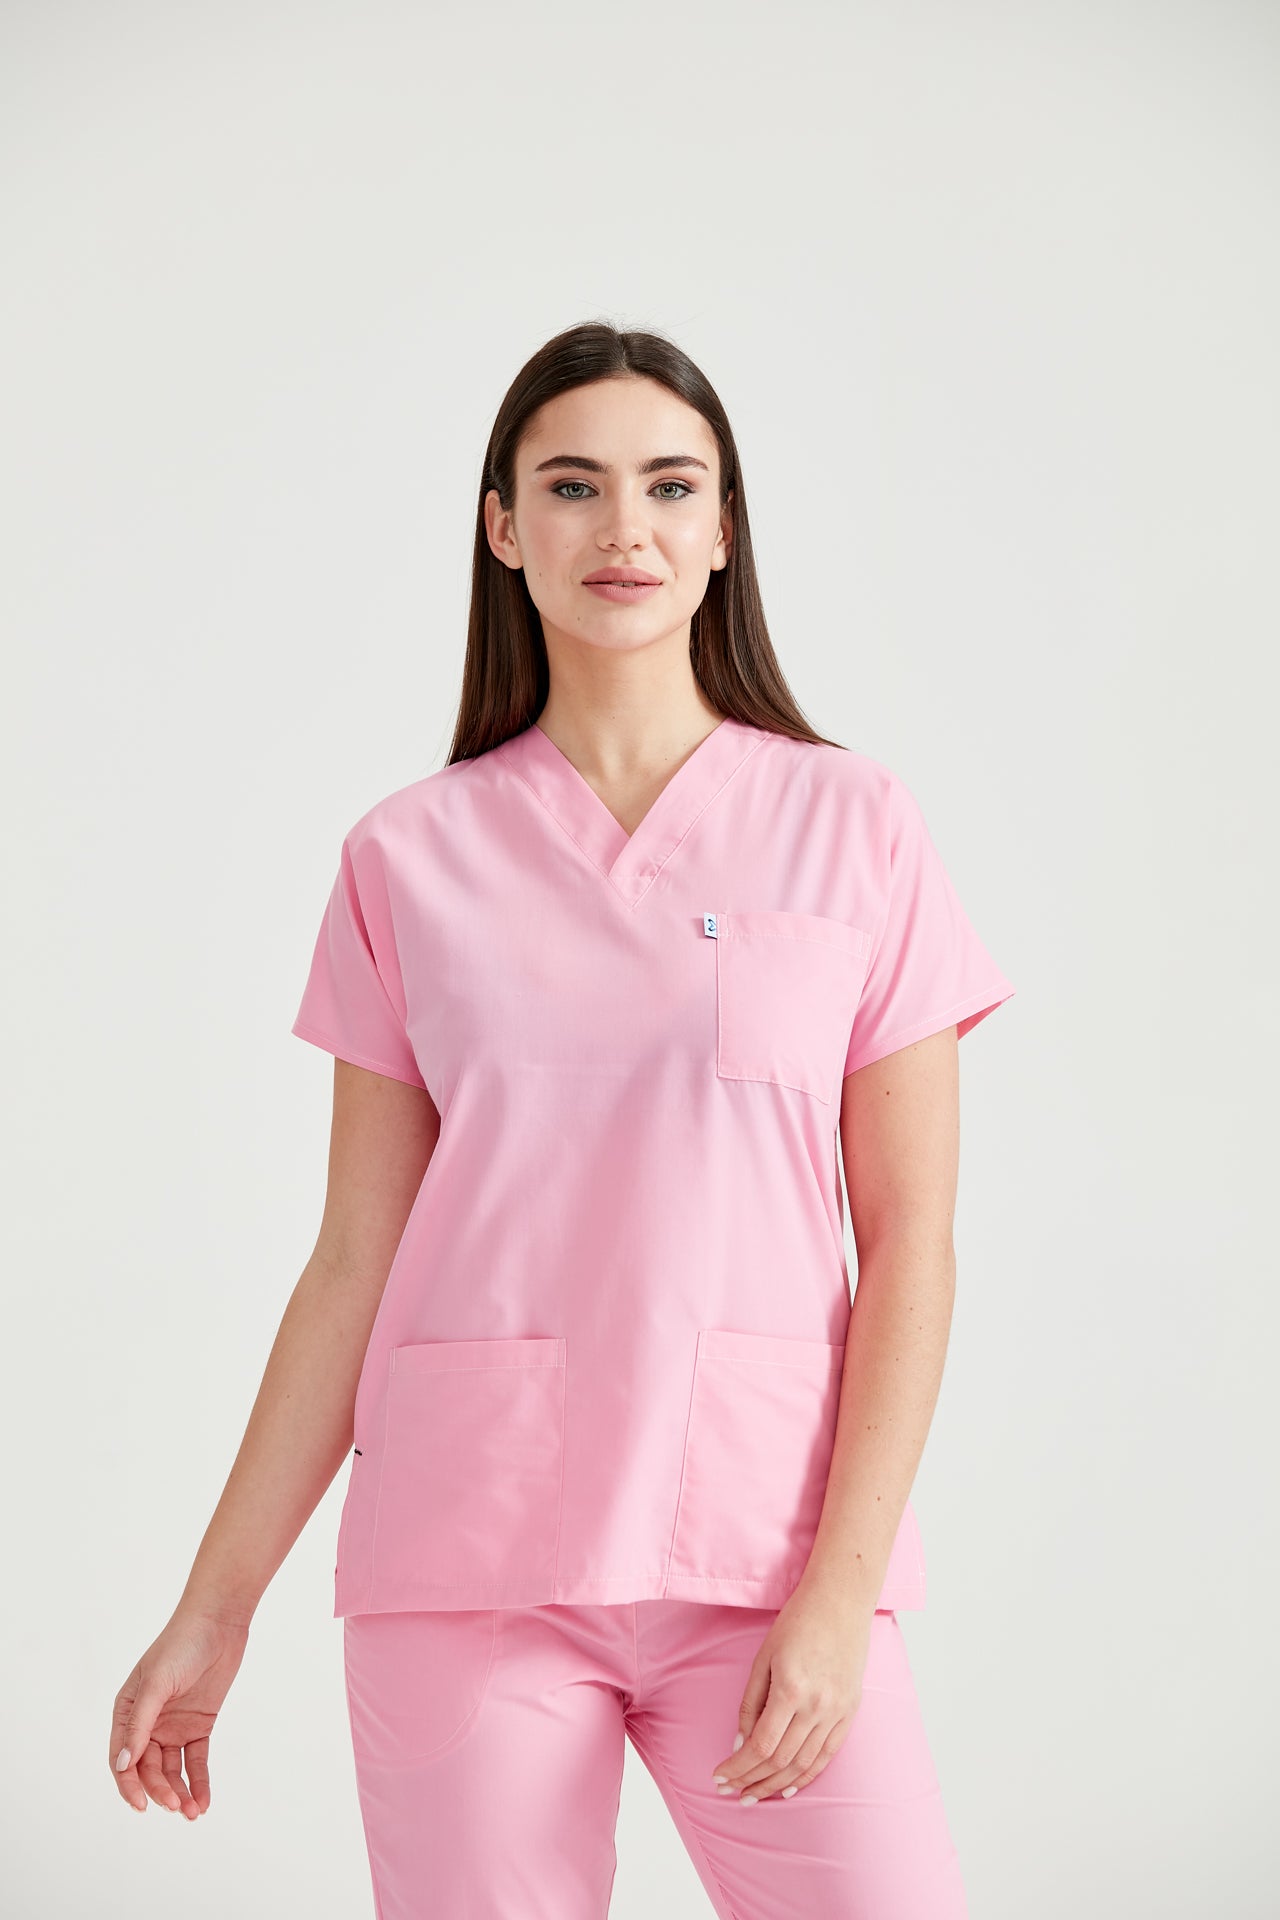  Asistenta medicala imbracata in costum roz Baby Pink, vedere din fata